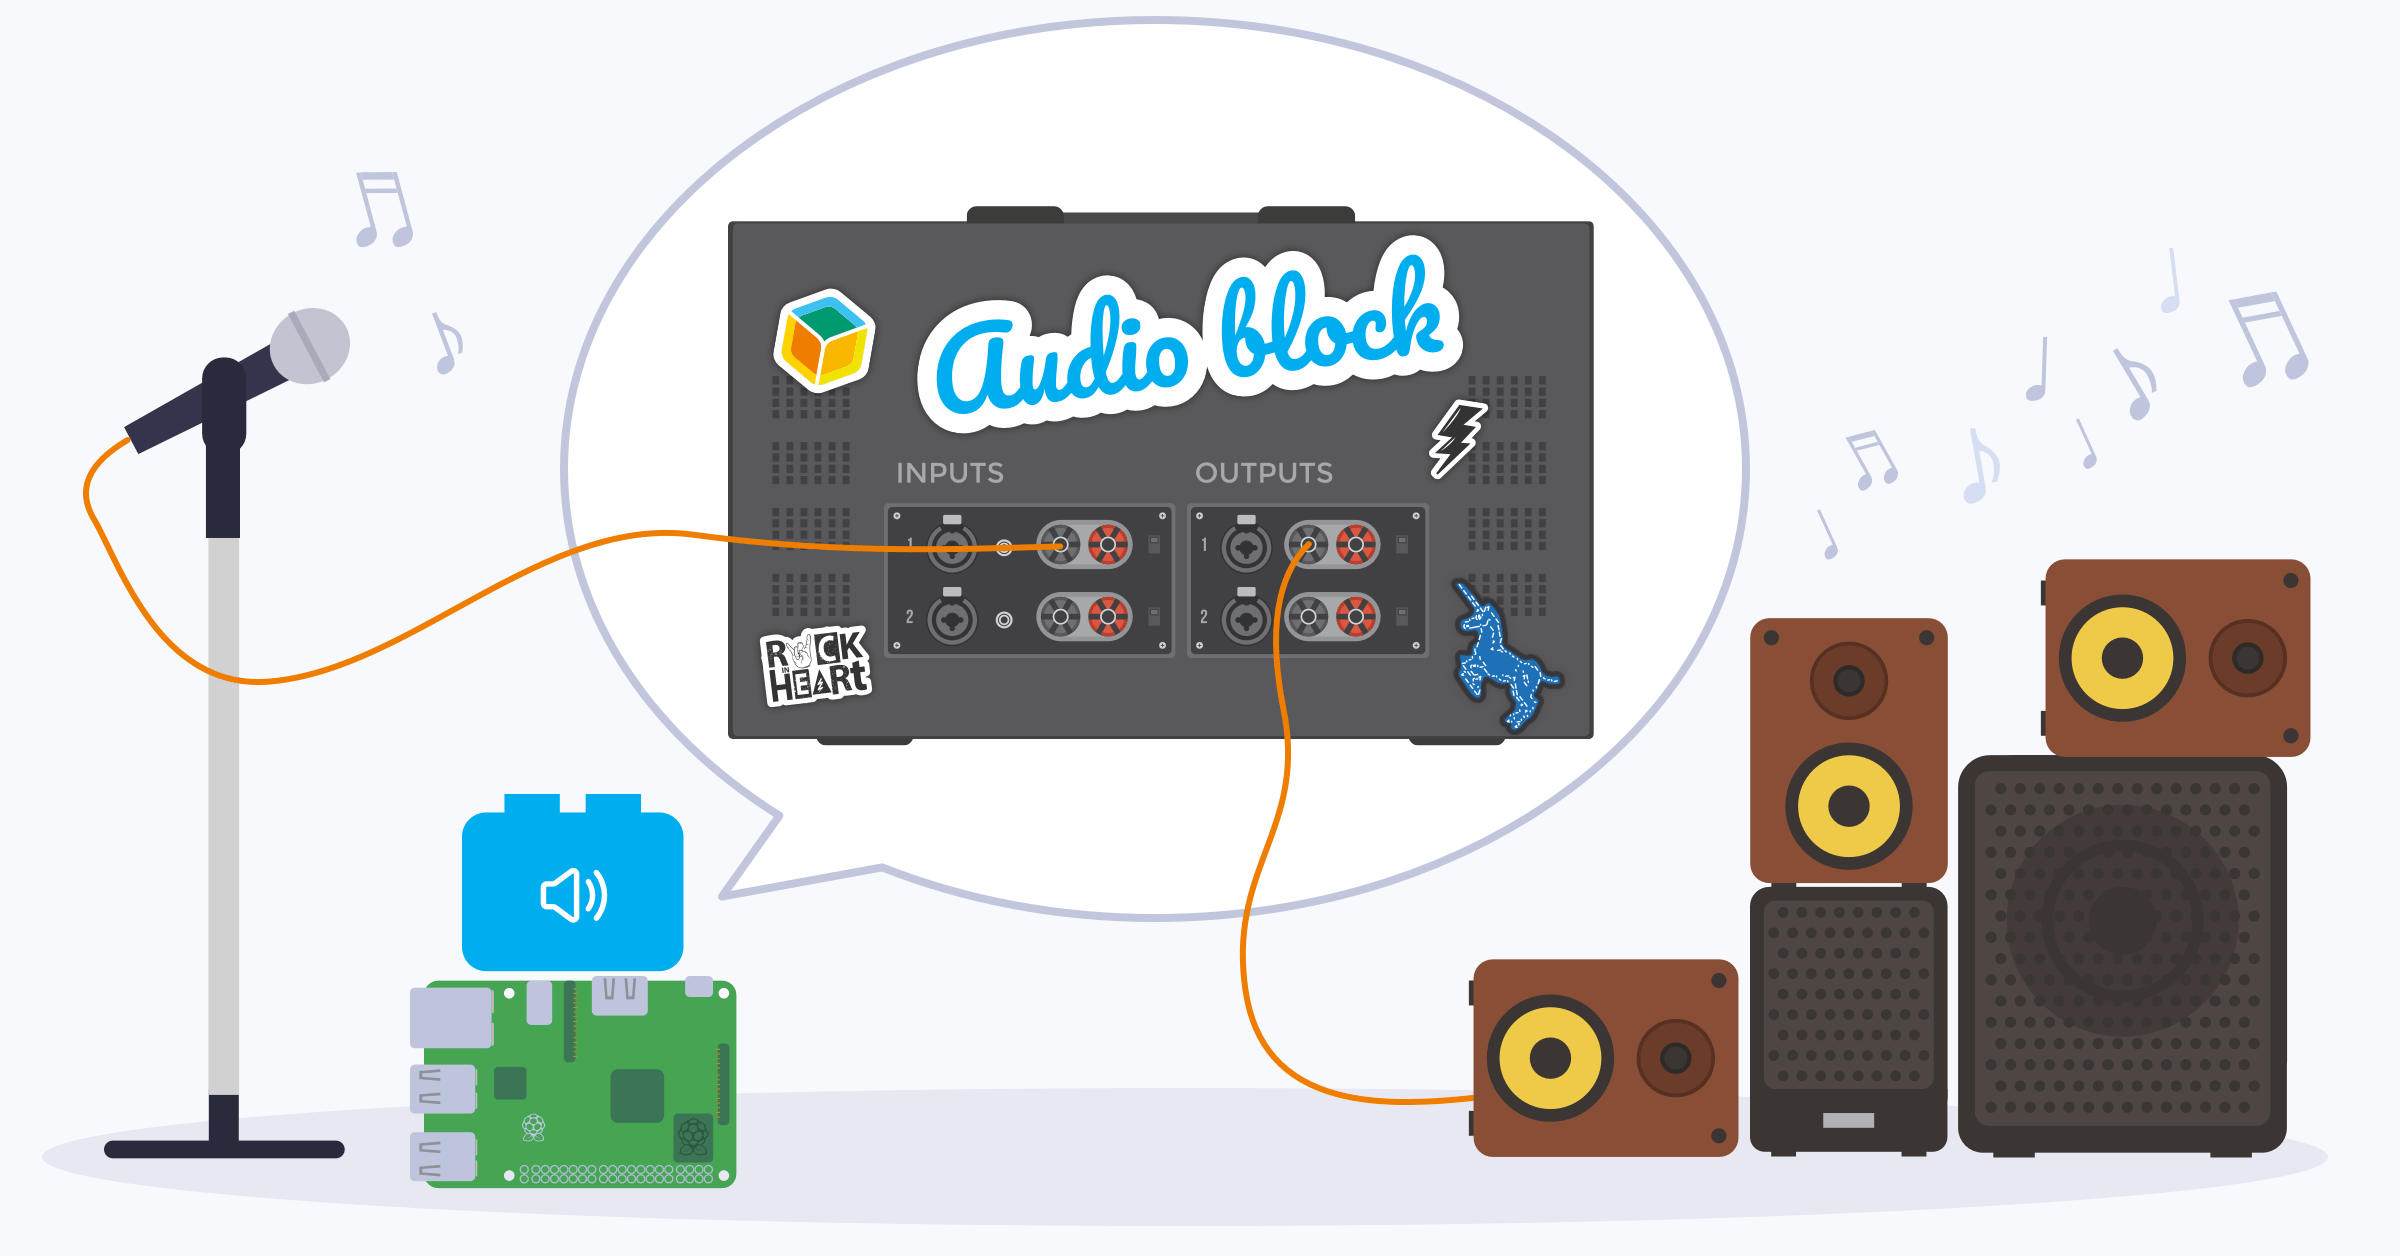 How balenaSound inspired the audio block